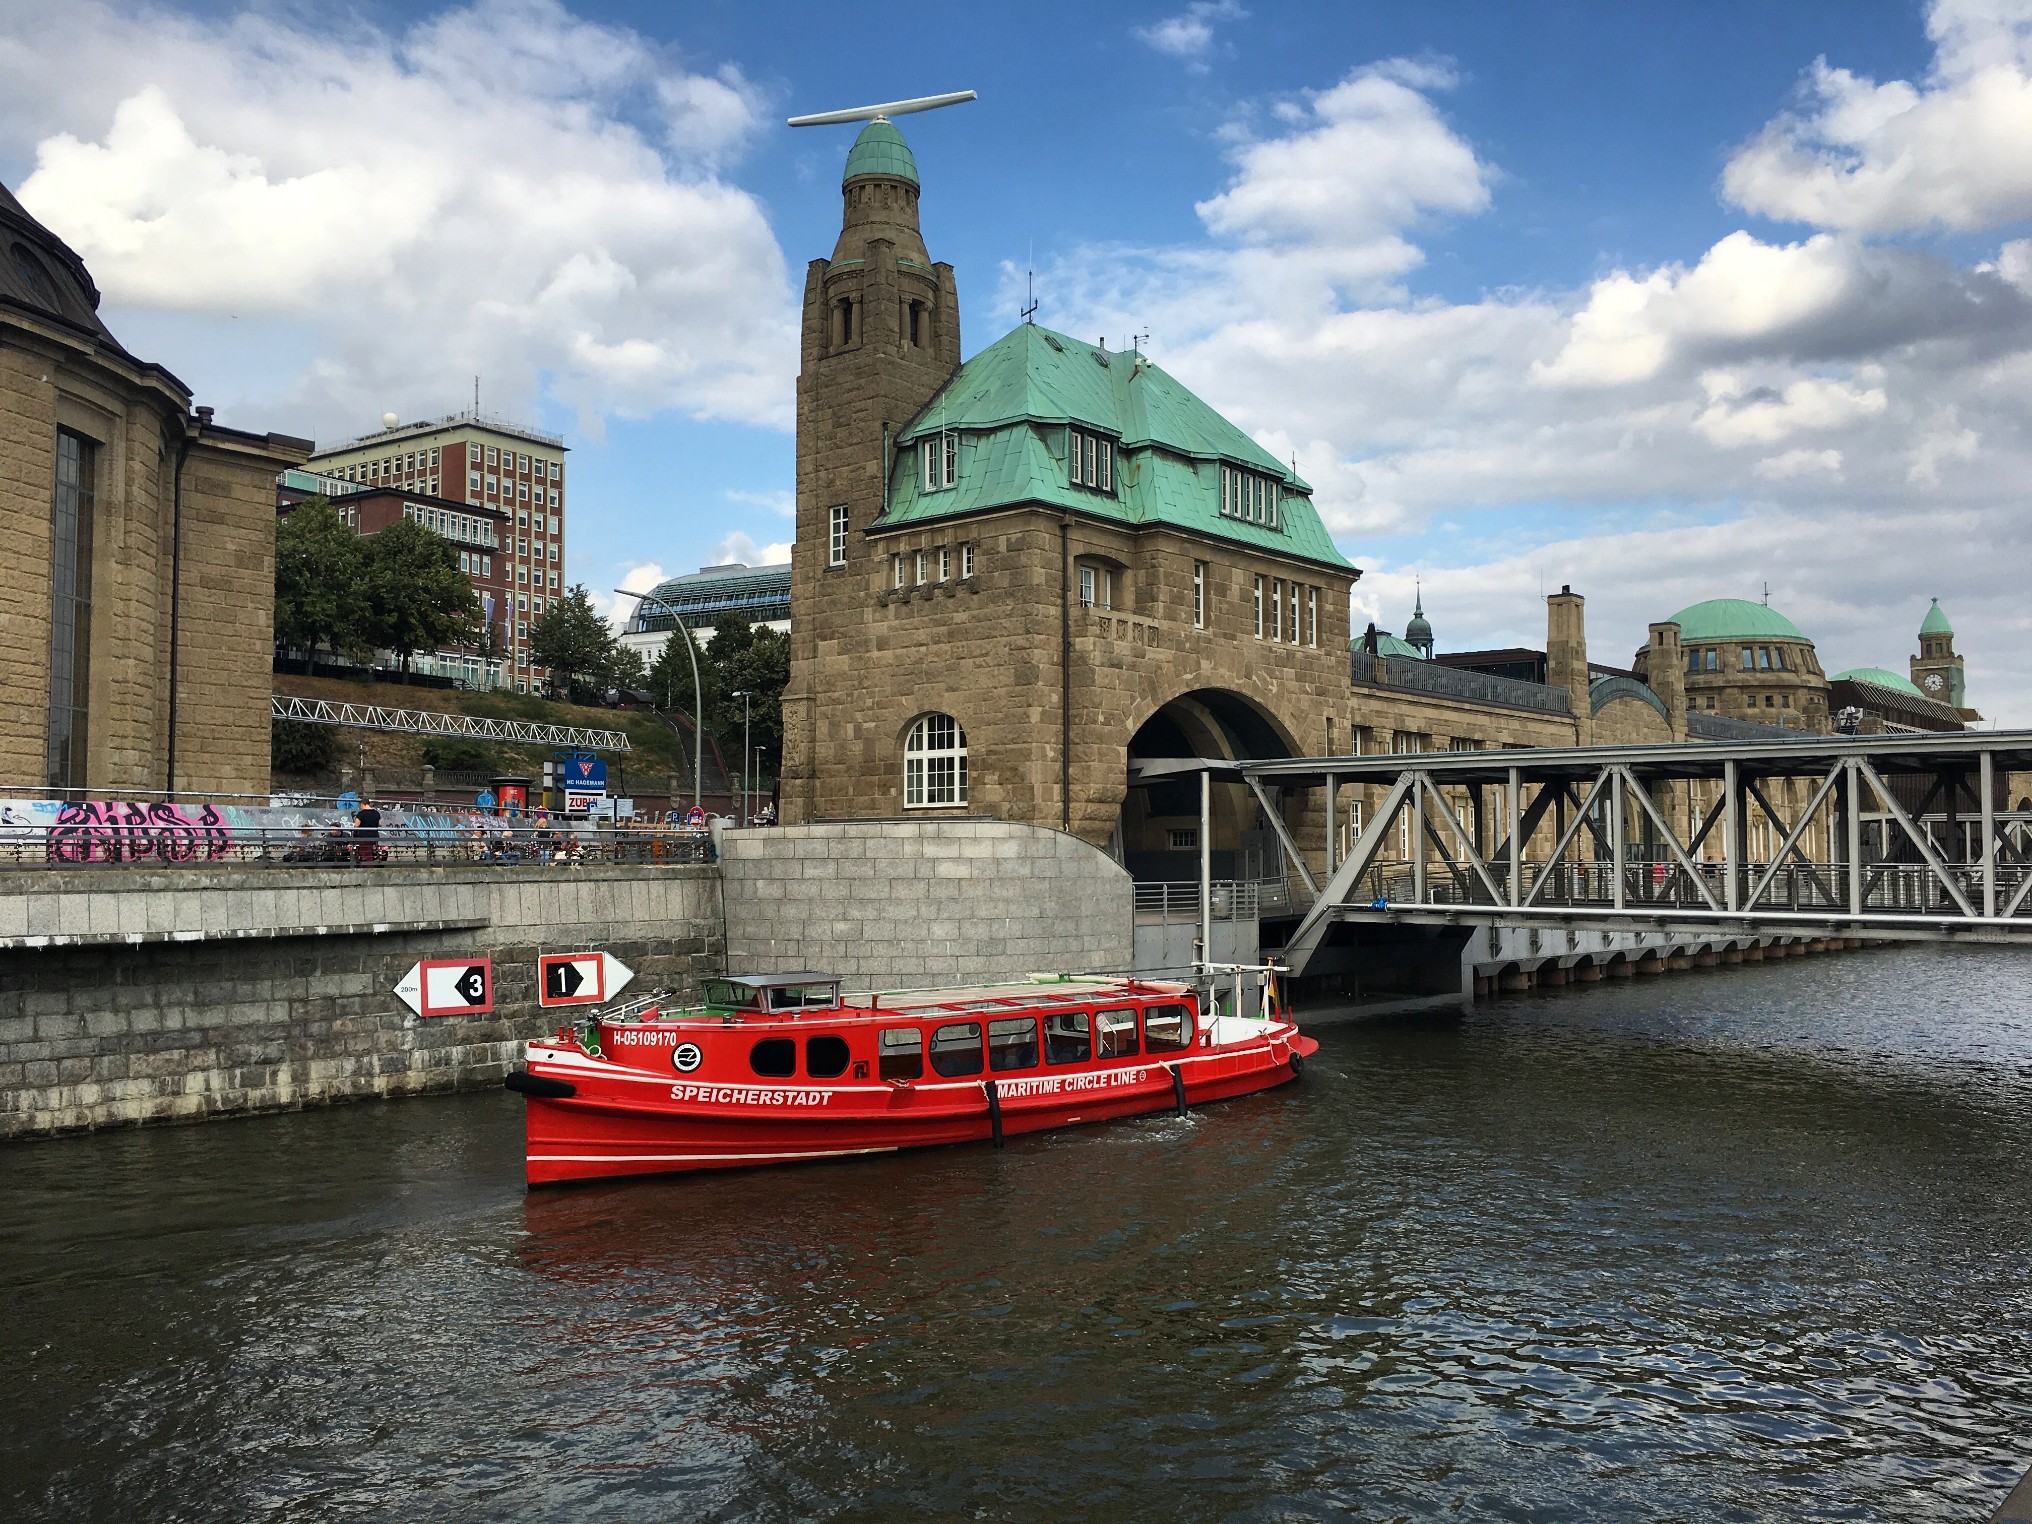 Hamburg, Germany: I’m on a Boat